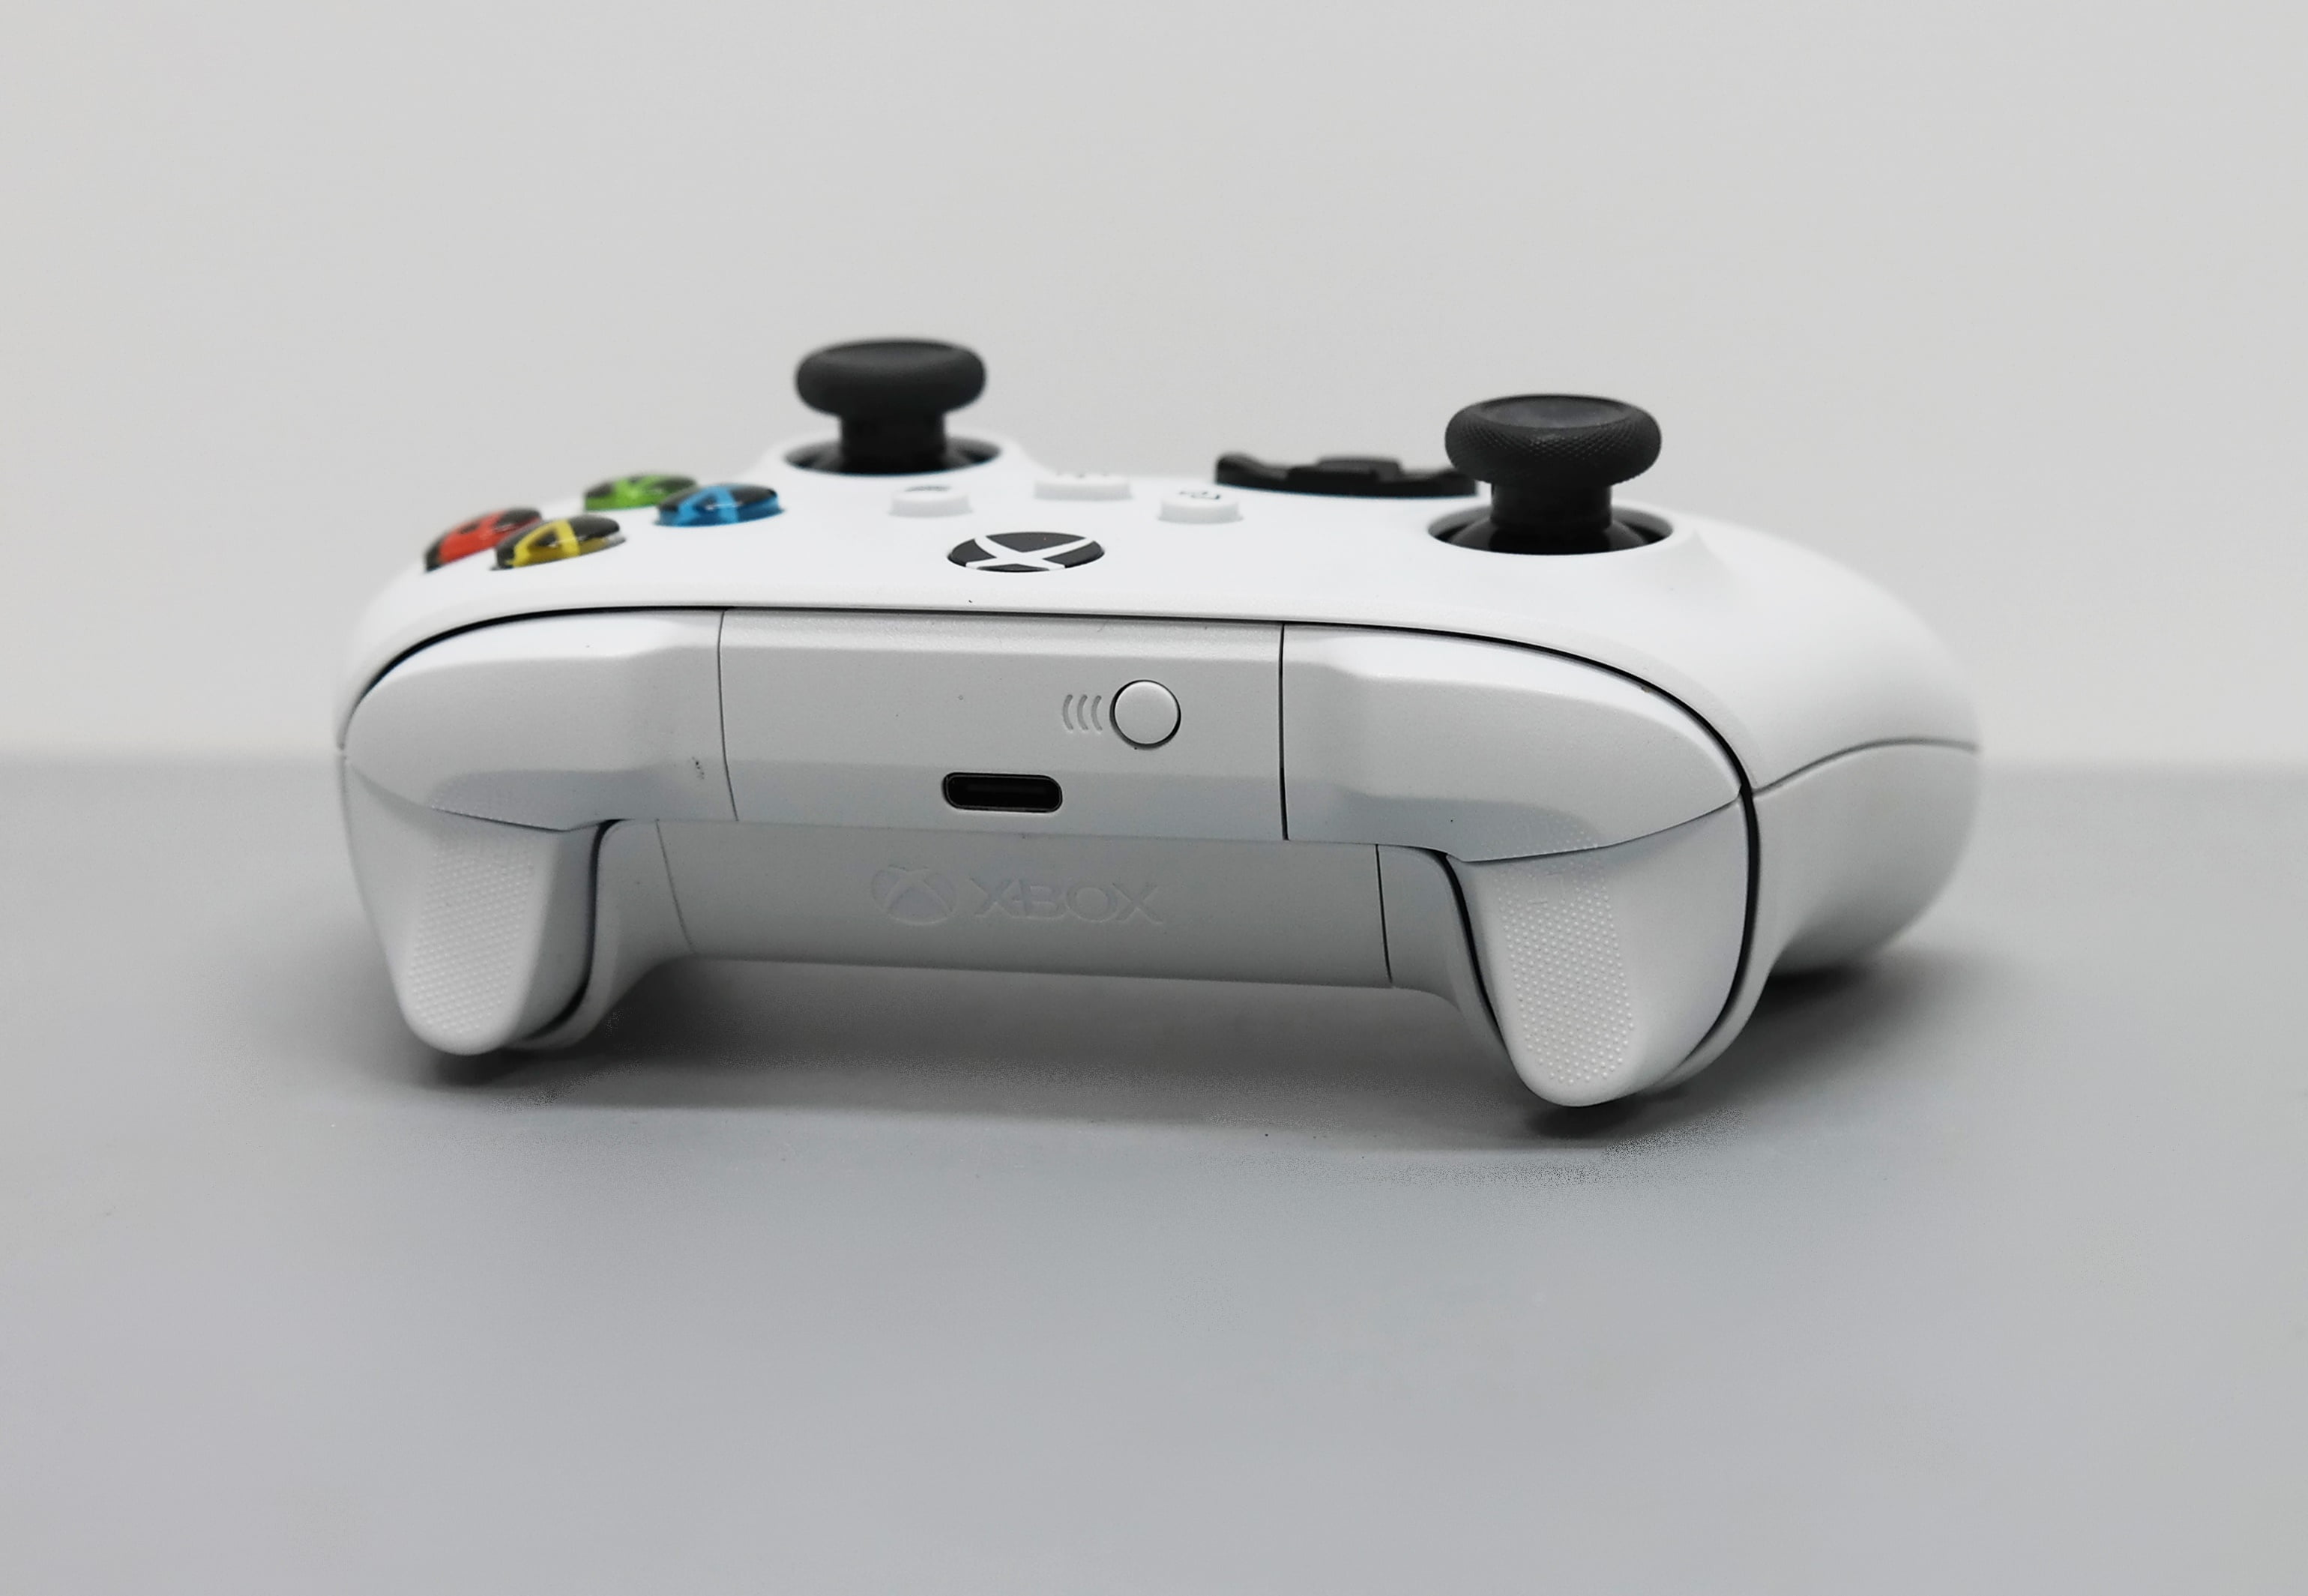 Controle Xbox-Series S/X, Xbox-One S/X, Robot White, Branco, Original  Microsoft - Nova Era Games e Informática